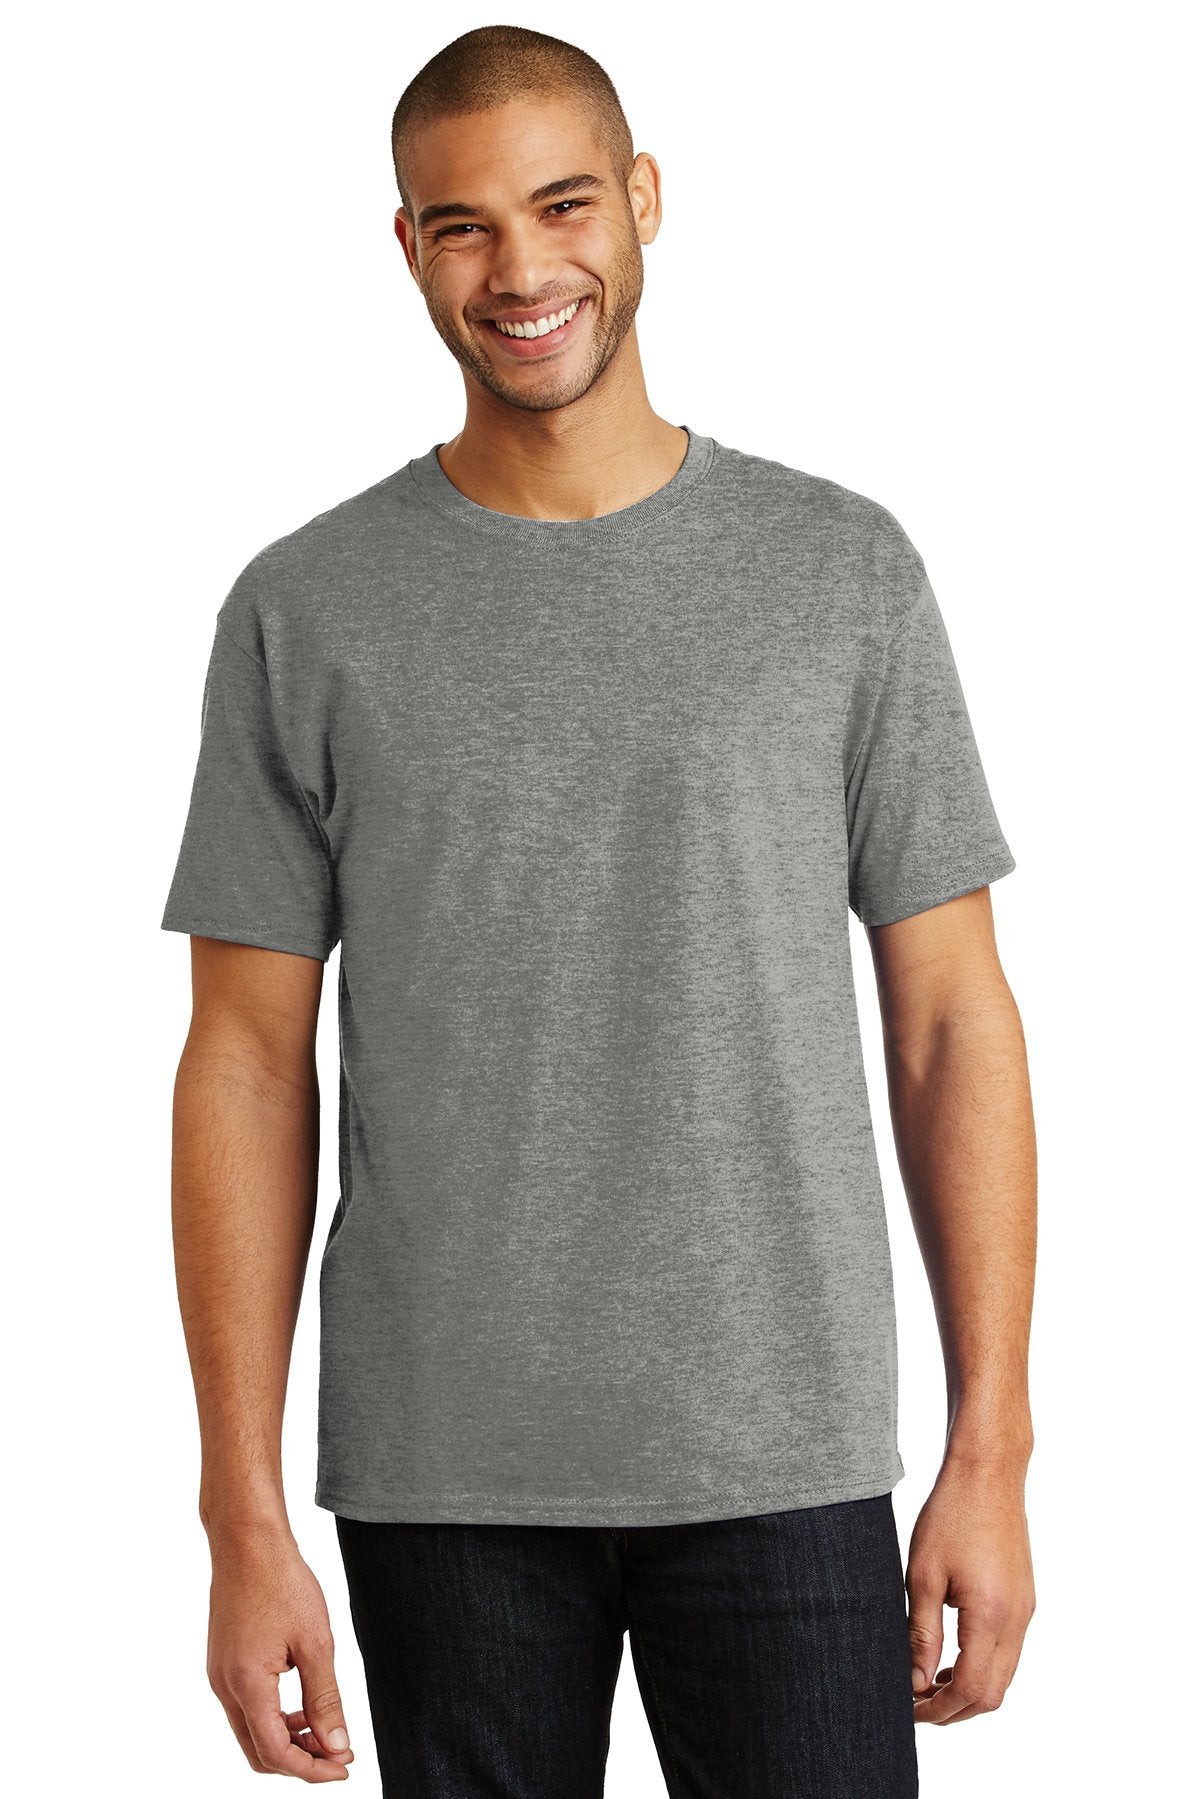 hanes tagless cotton t shirt 5250 oxford grey